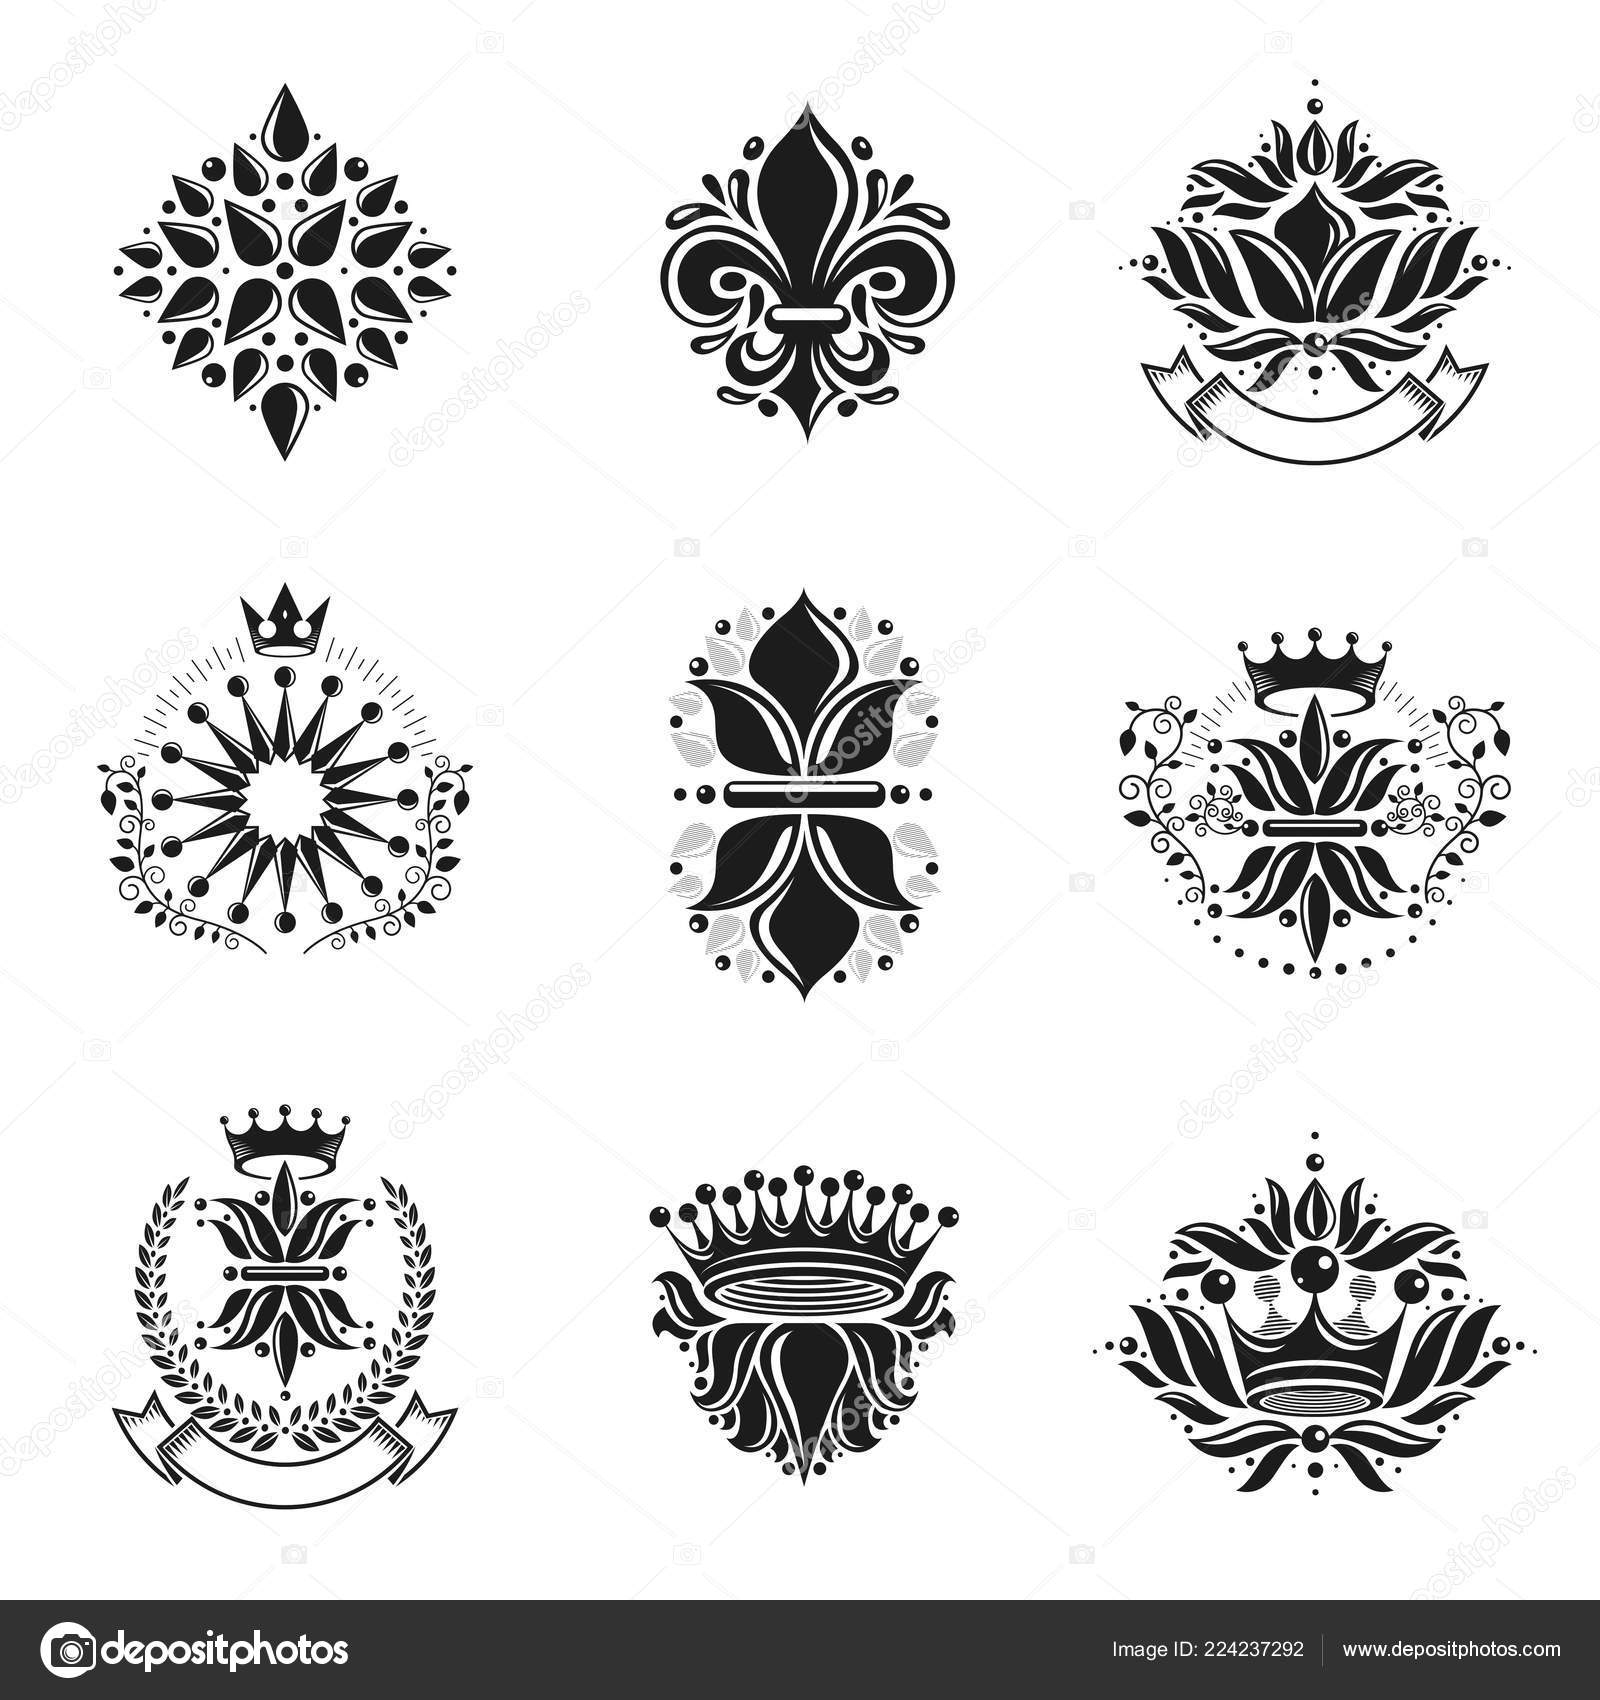 Download Pictures: flower crowns | Flowers Royal Symbols Floral ...